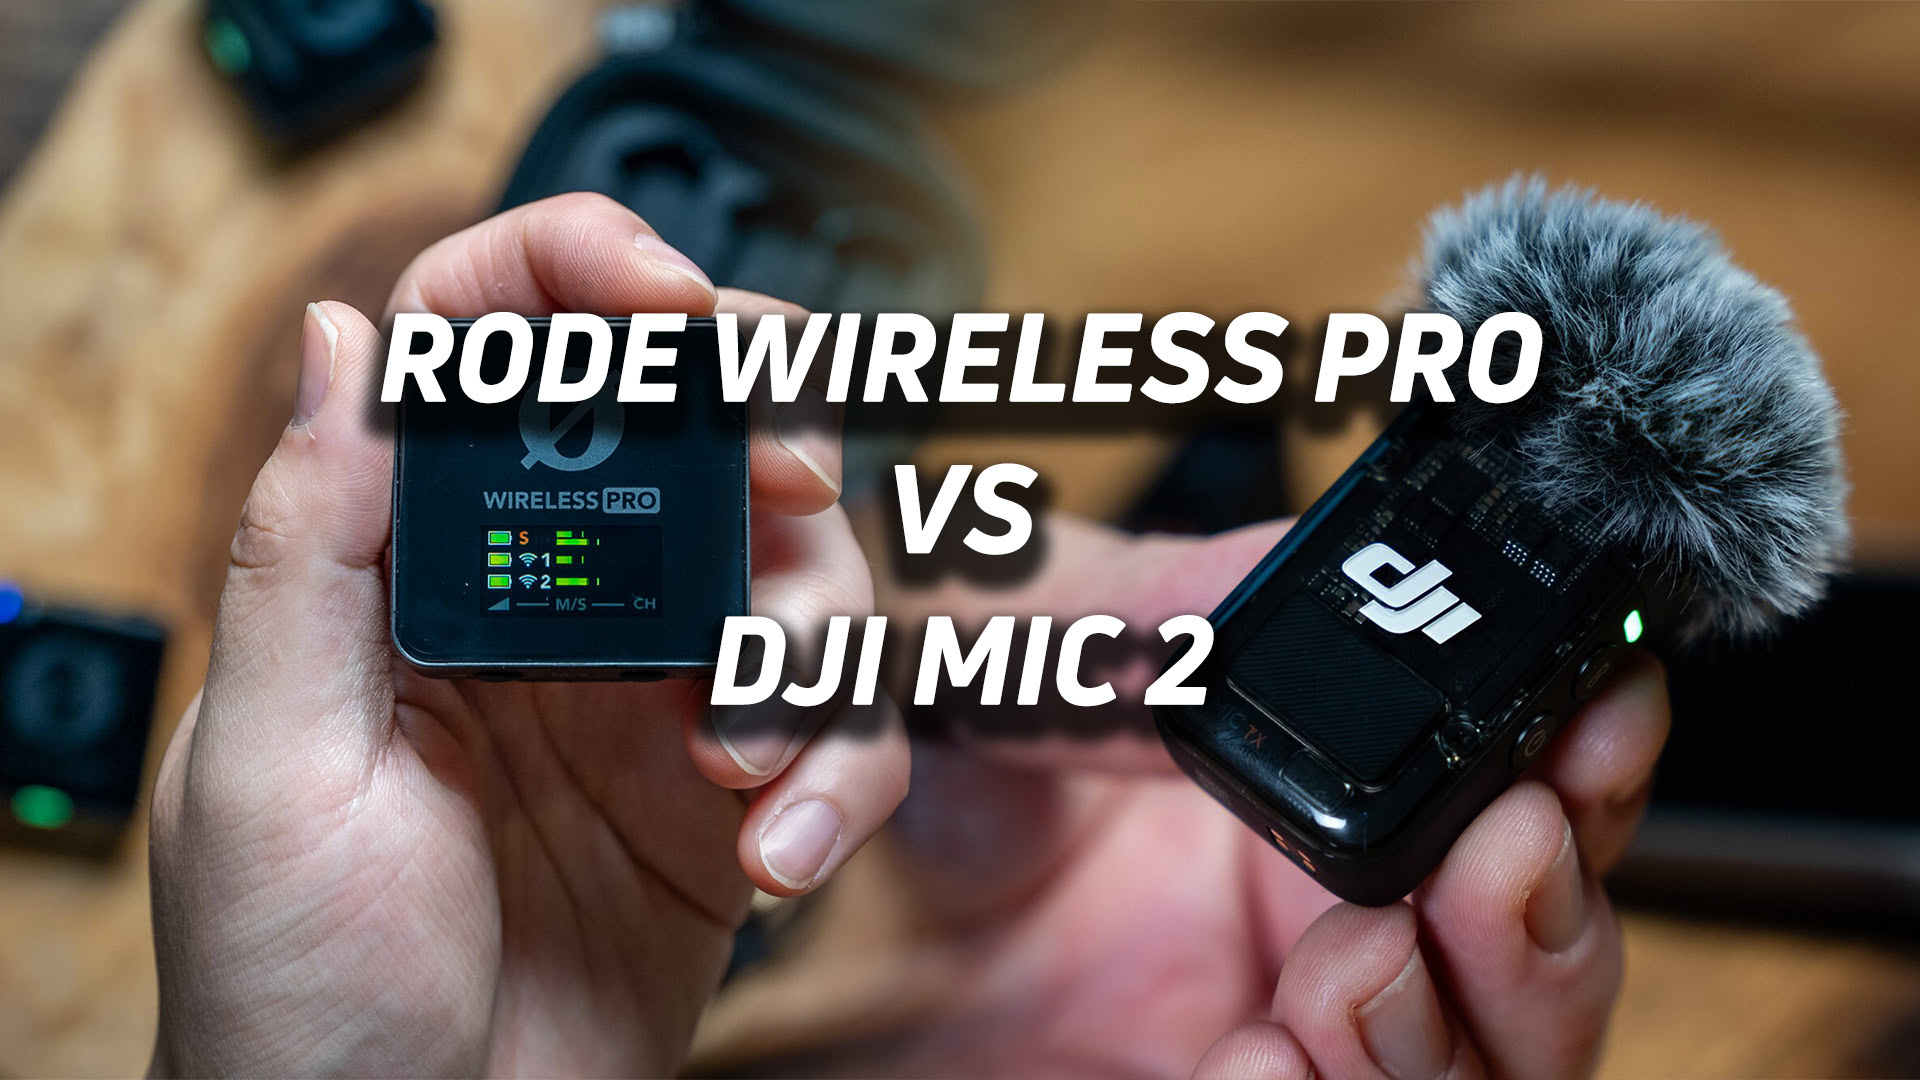 Rode WIreless Pro vs DJI Mic 2